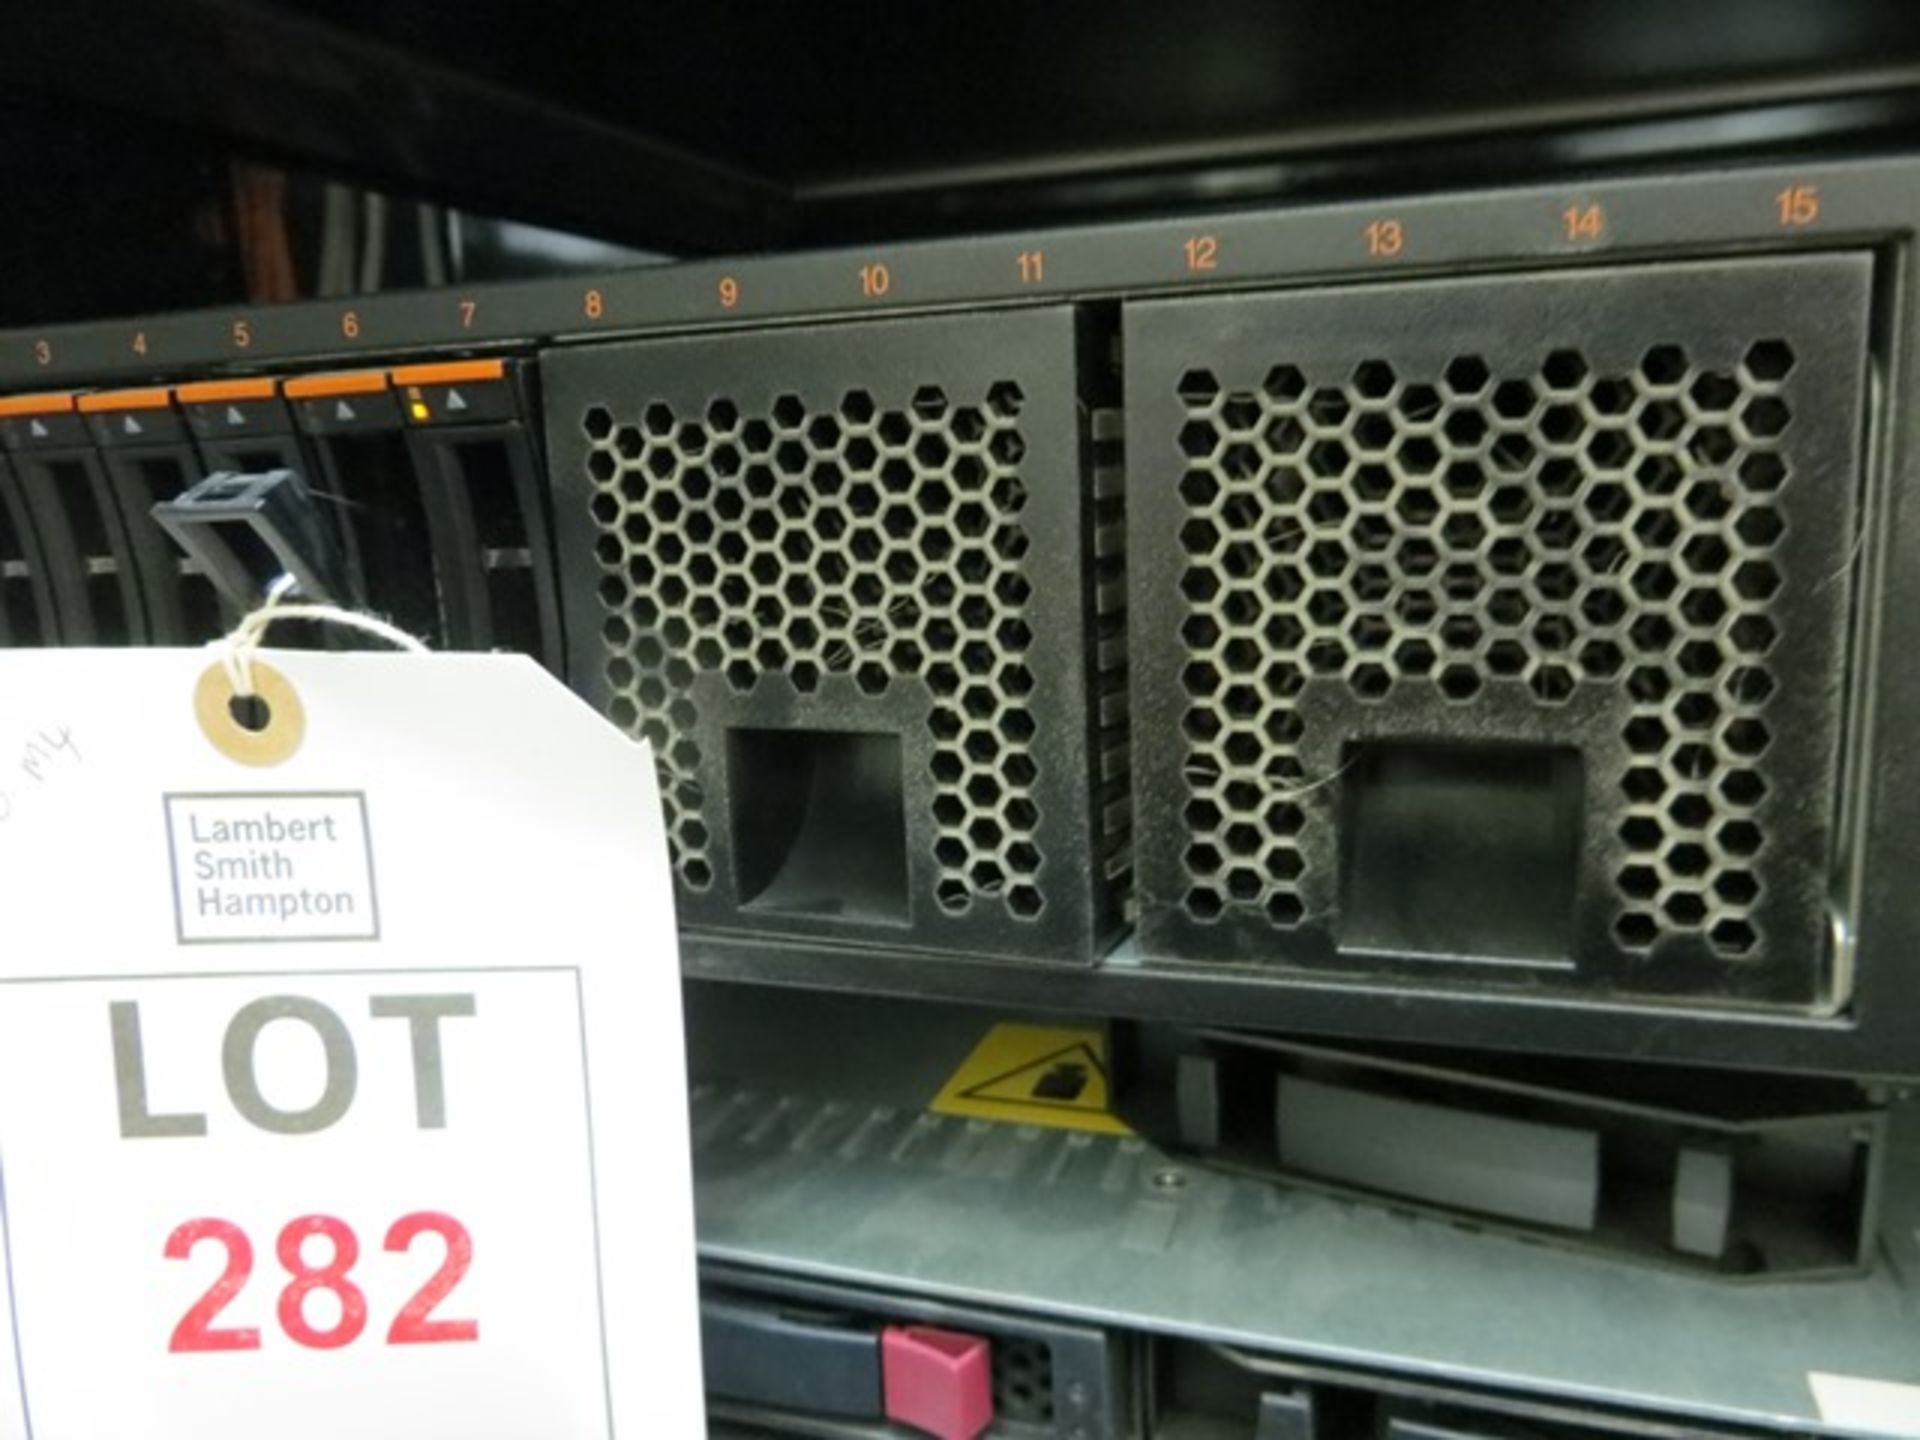 IBM X3650 M4 server s/n KDOM2TO - Image 3 of 3